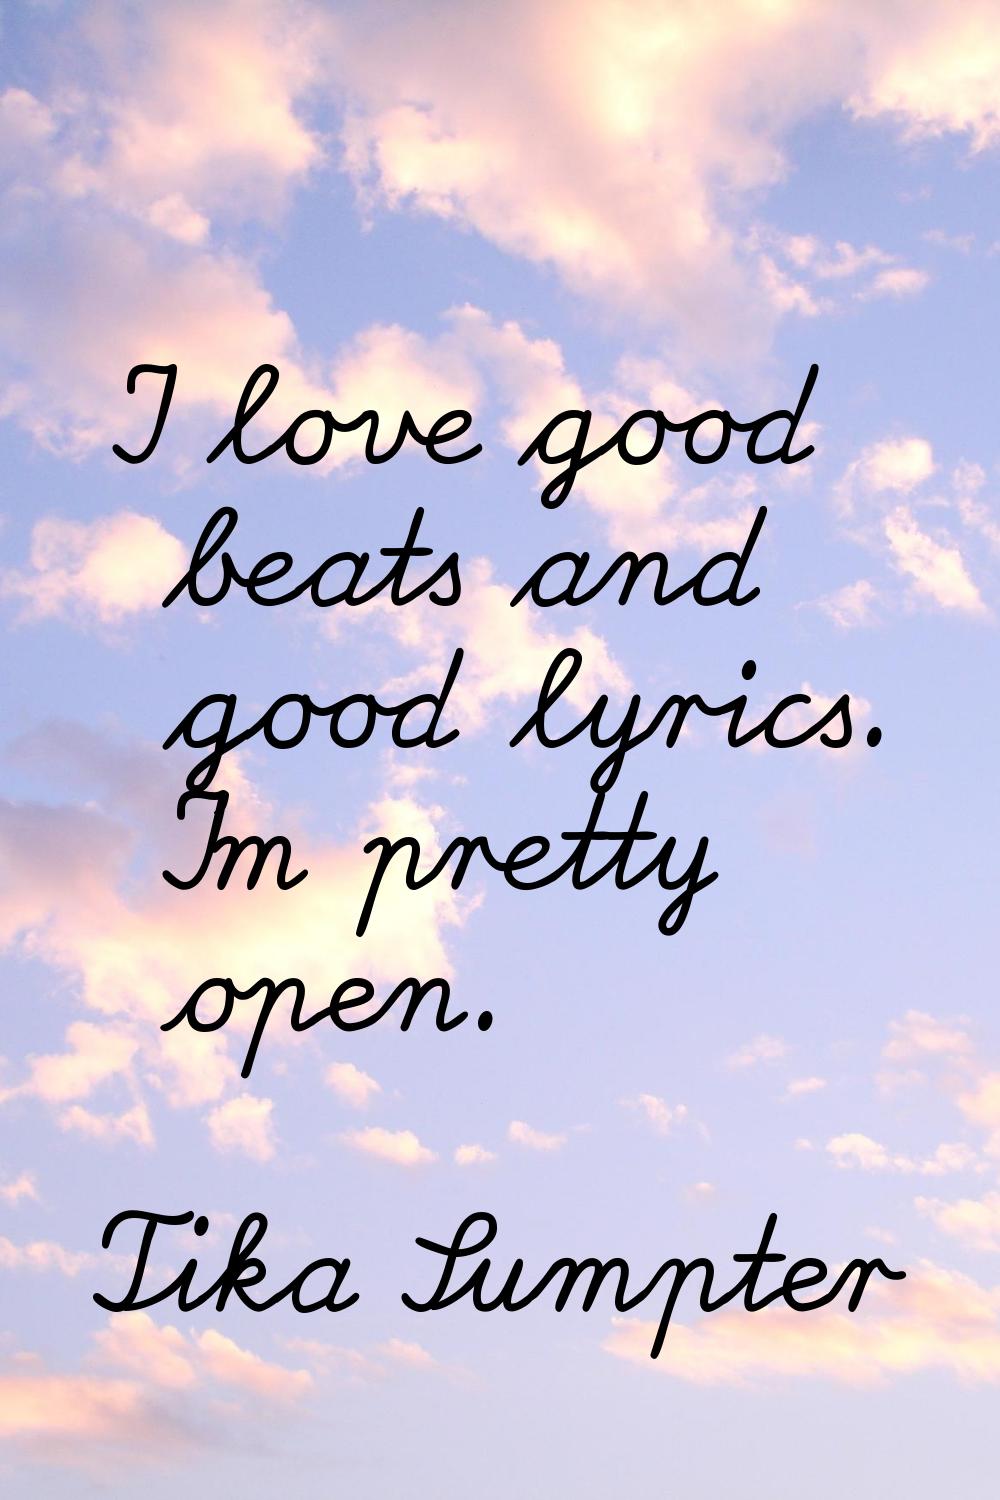 I love good beats and good lyrics. I'm pretty open.